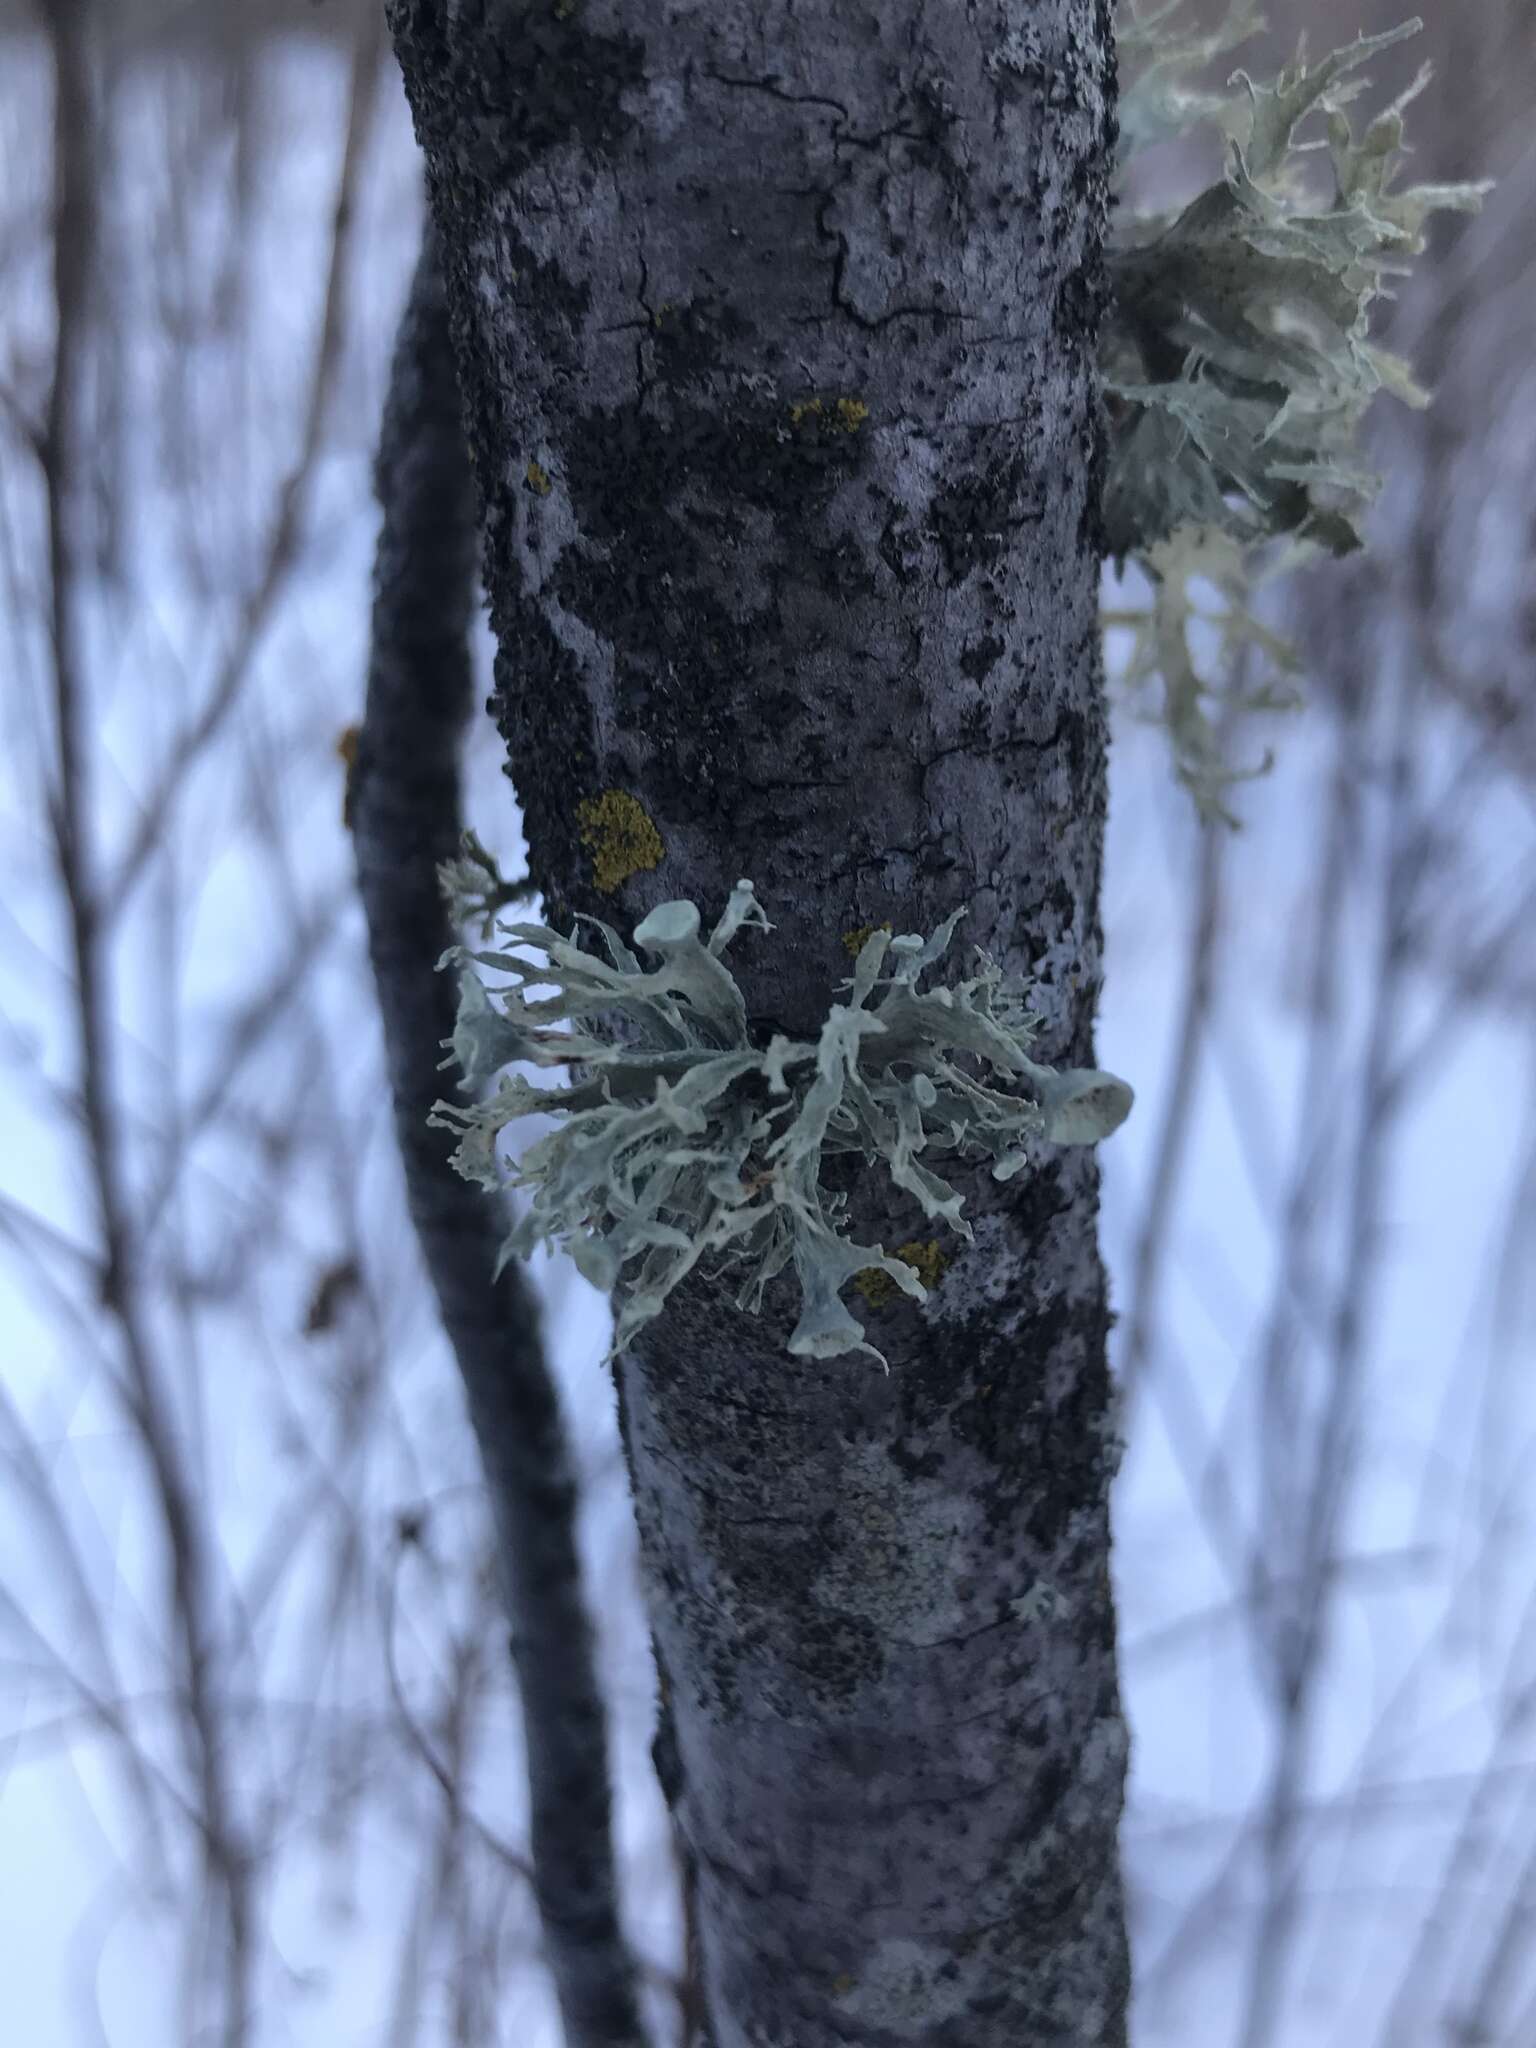 Image of cartilage lichen